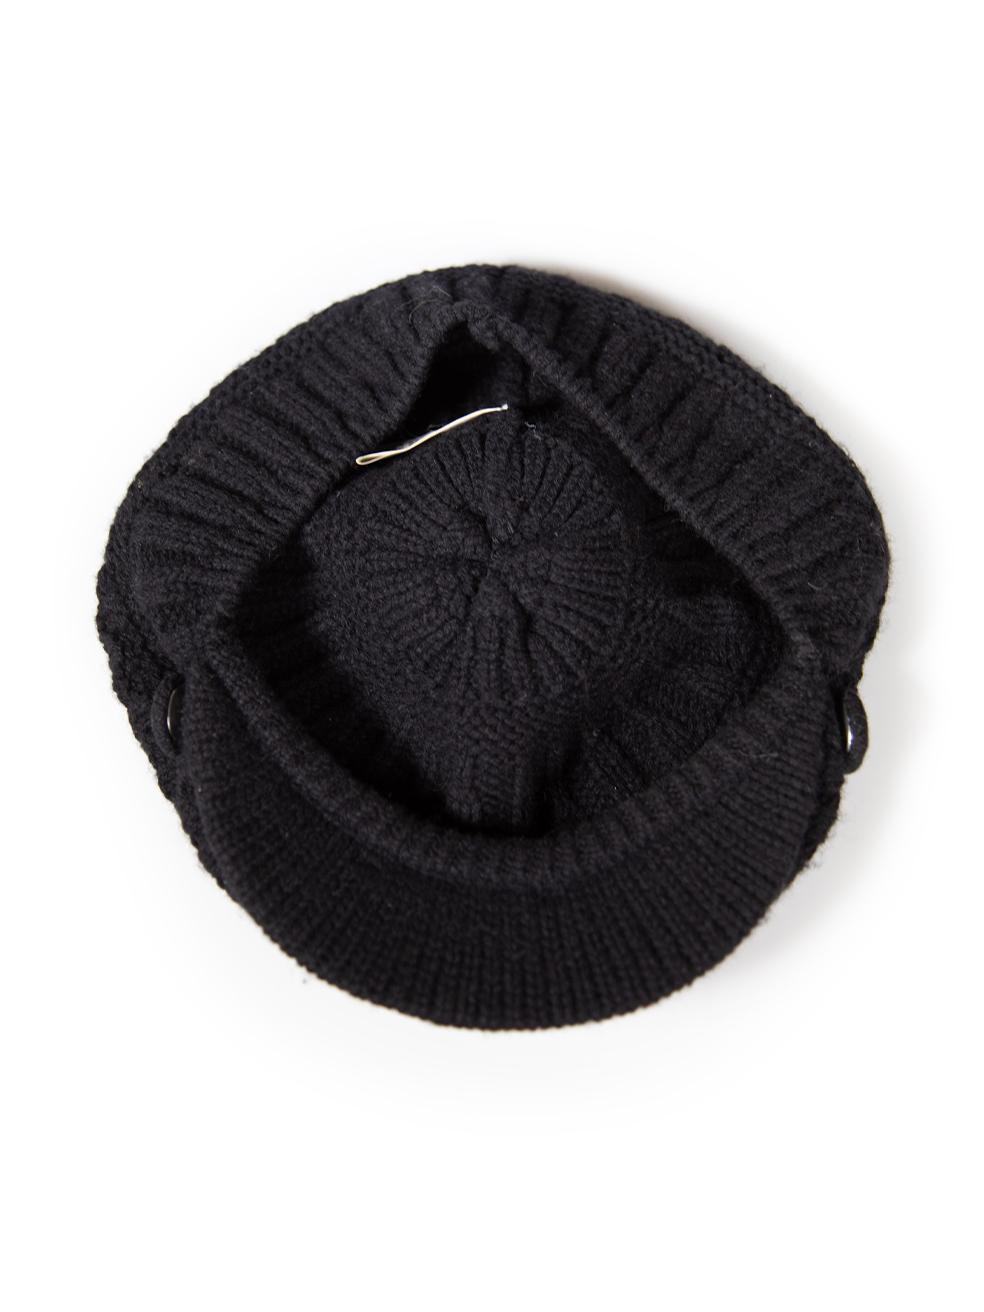 Women's Yohji Yamamoto Black Wool Pom Pom Knit Hat For Sale